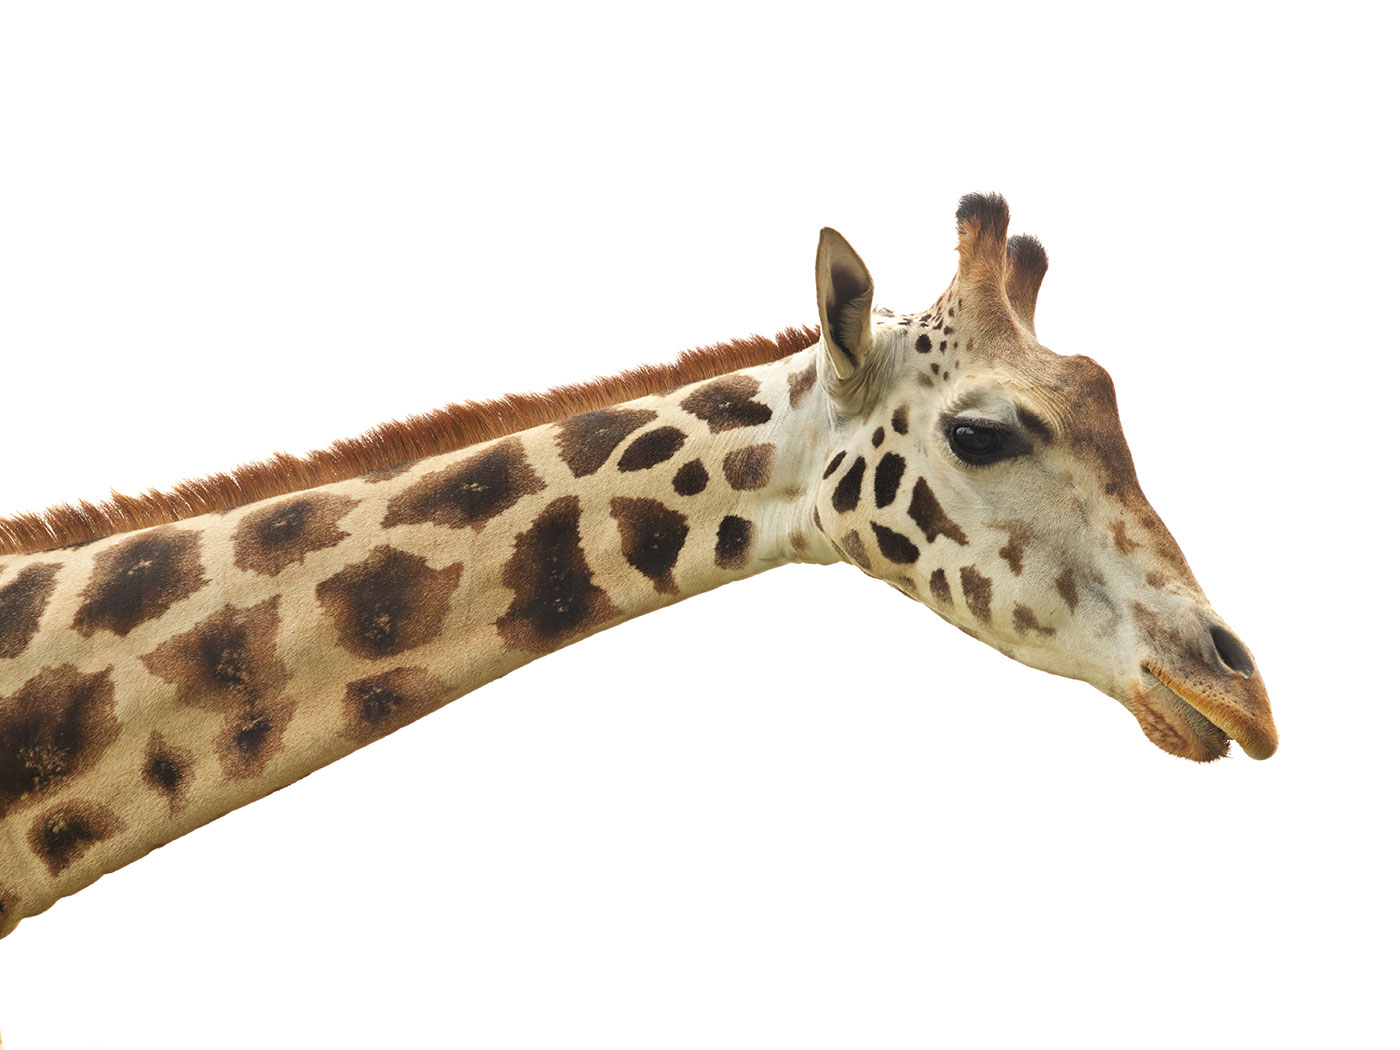 Giraffe Neck Evolution? | The Institute for Creation Research